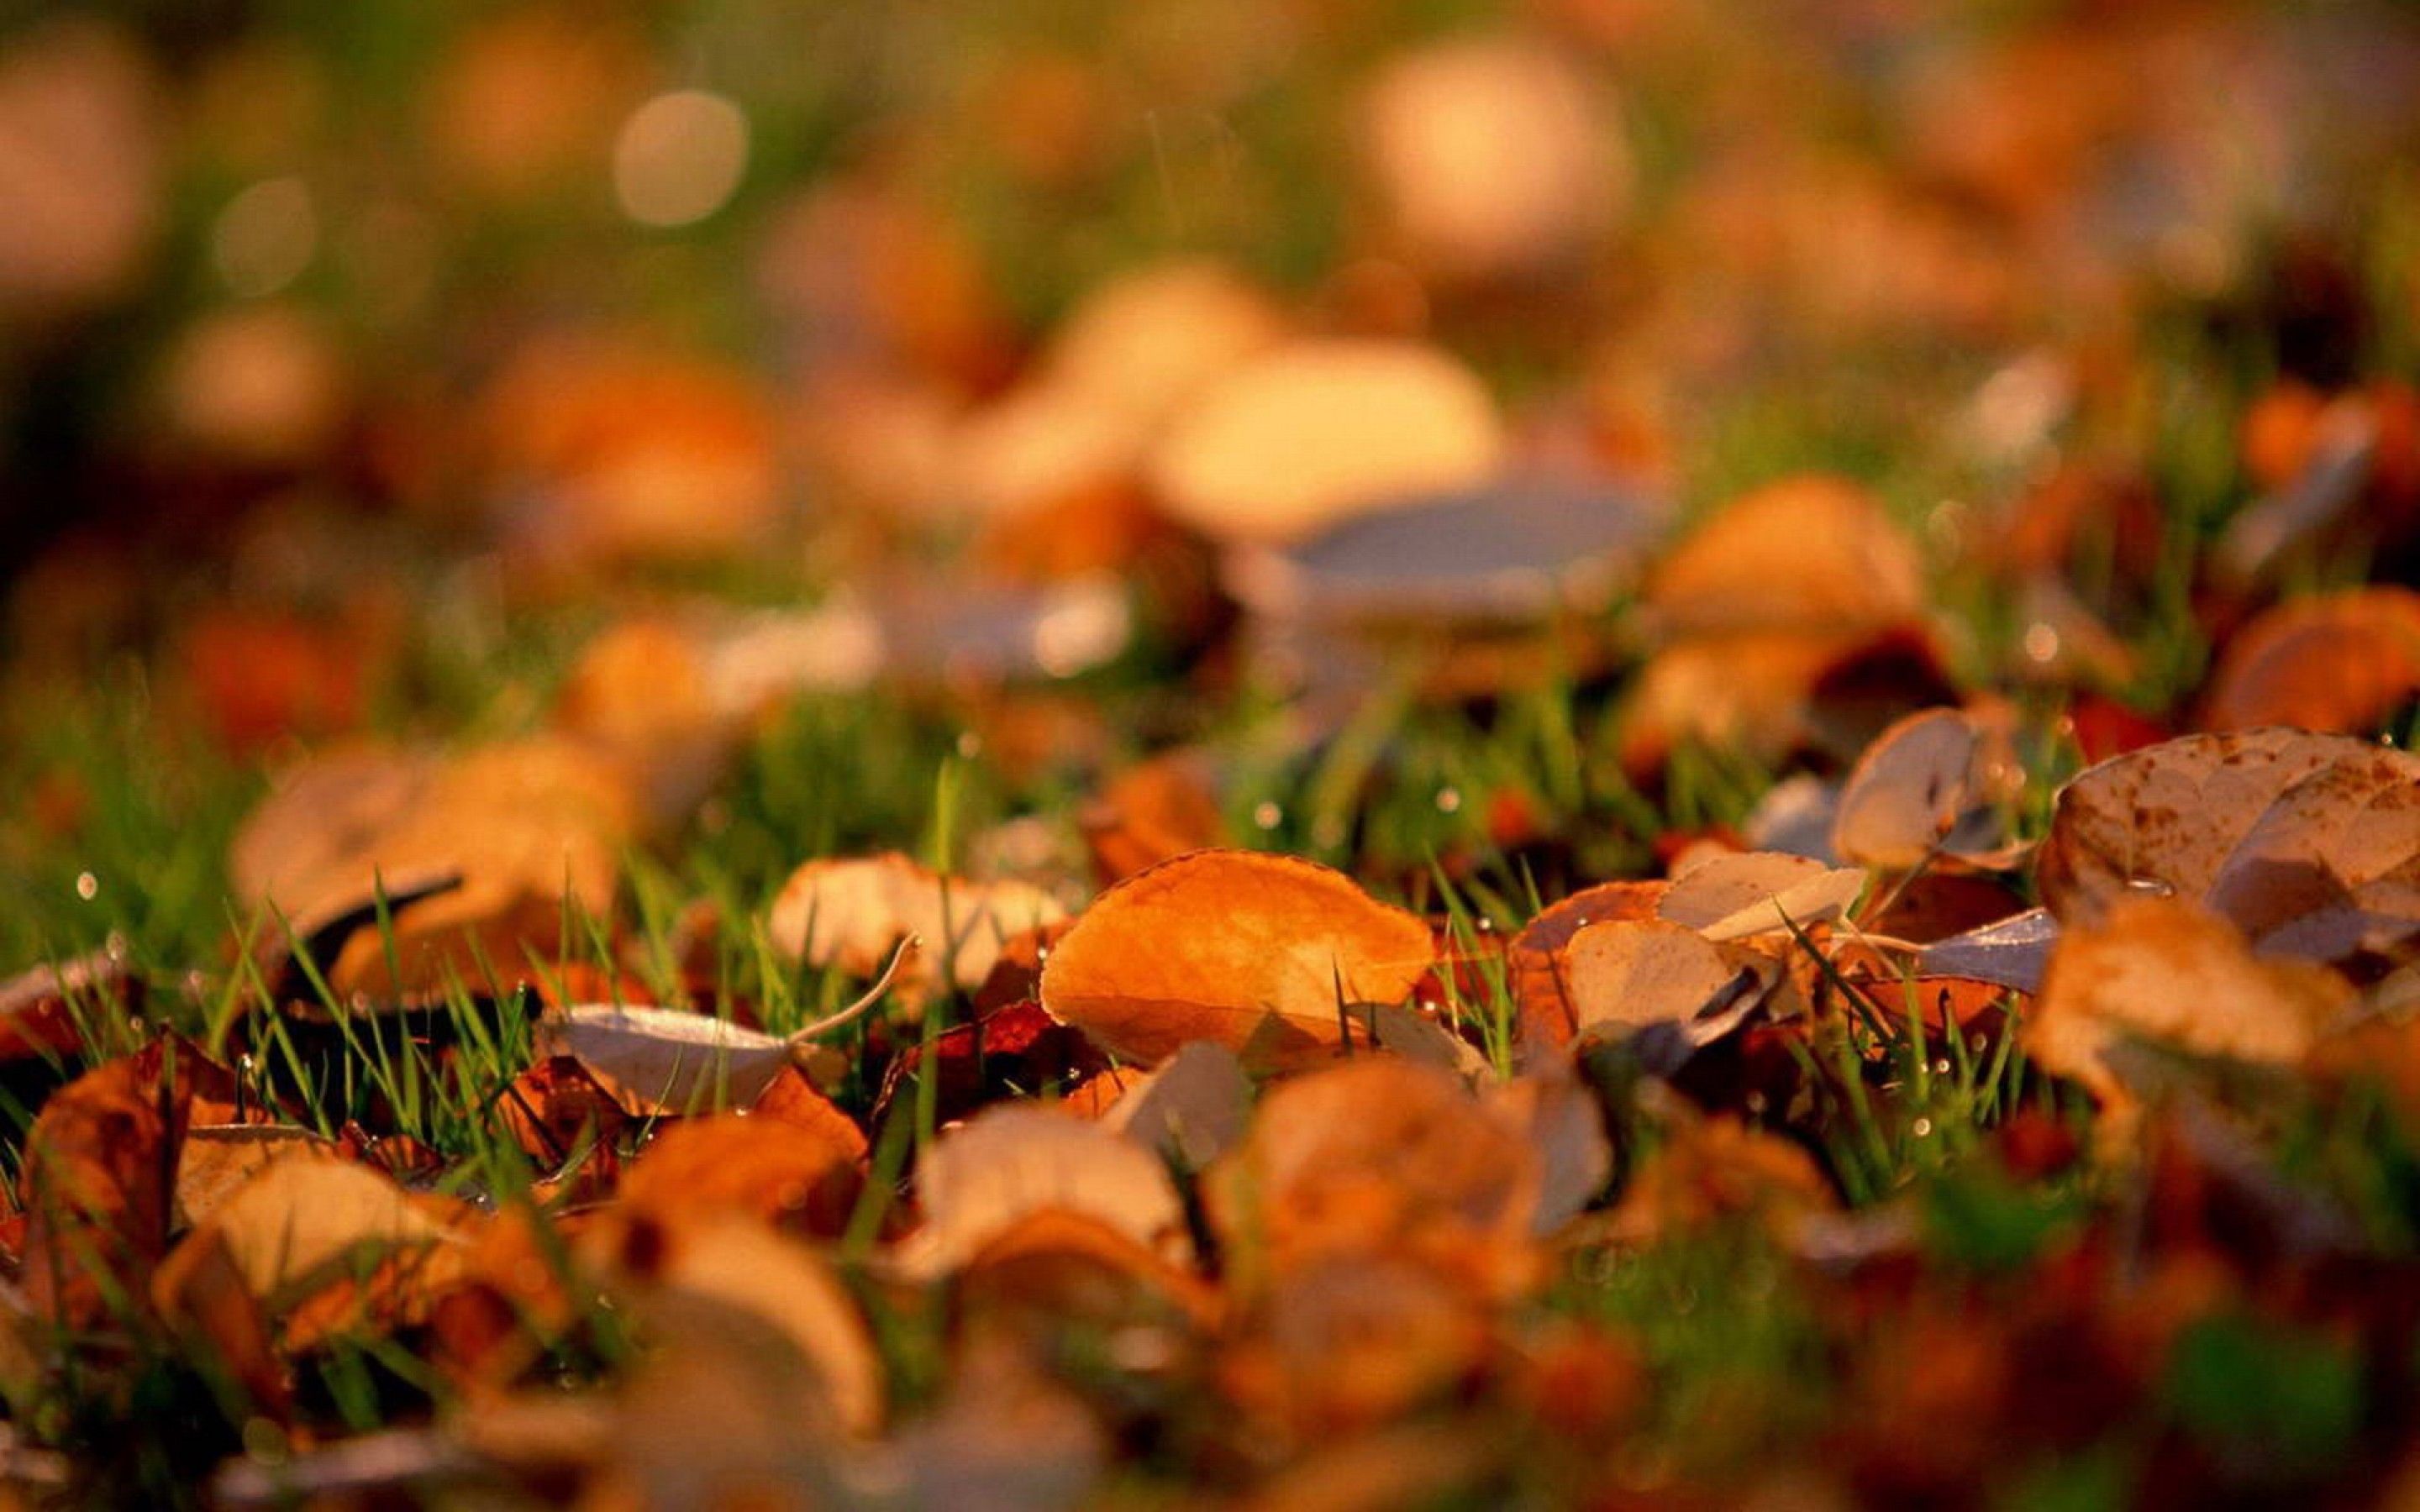 Autumn Leaves Retina MacBook Pro Wallpaper. Autumn leaves wallpaper, Autumn nature, Autumn scenes